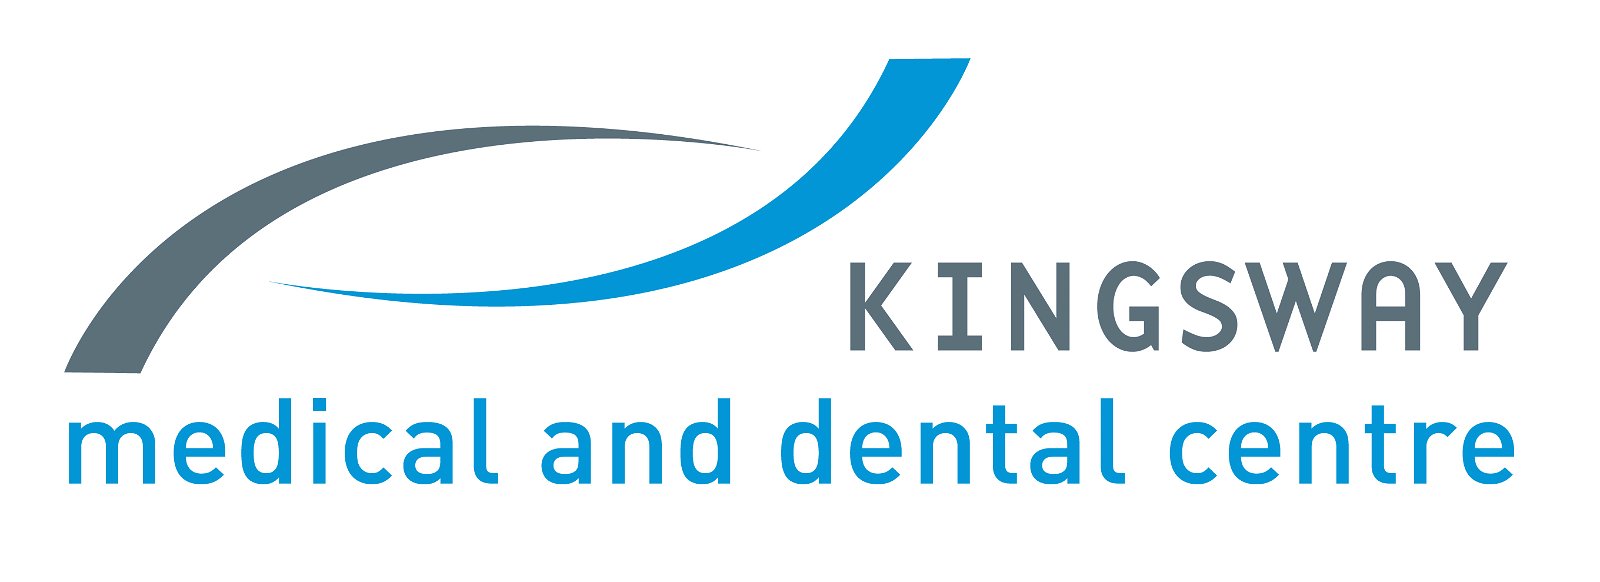 Kingsway Medical And Dental Centre - Cairns Dentist 0